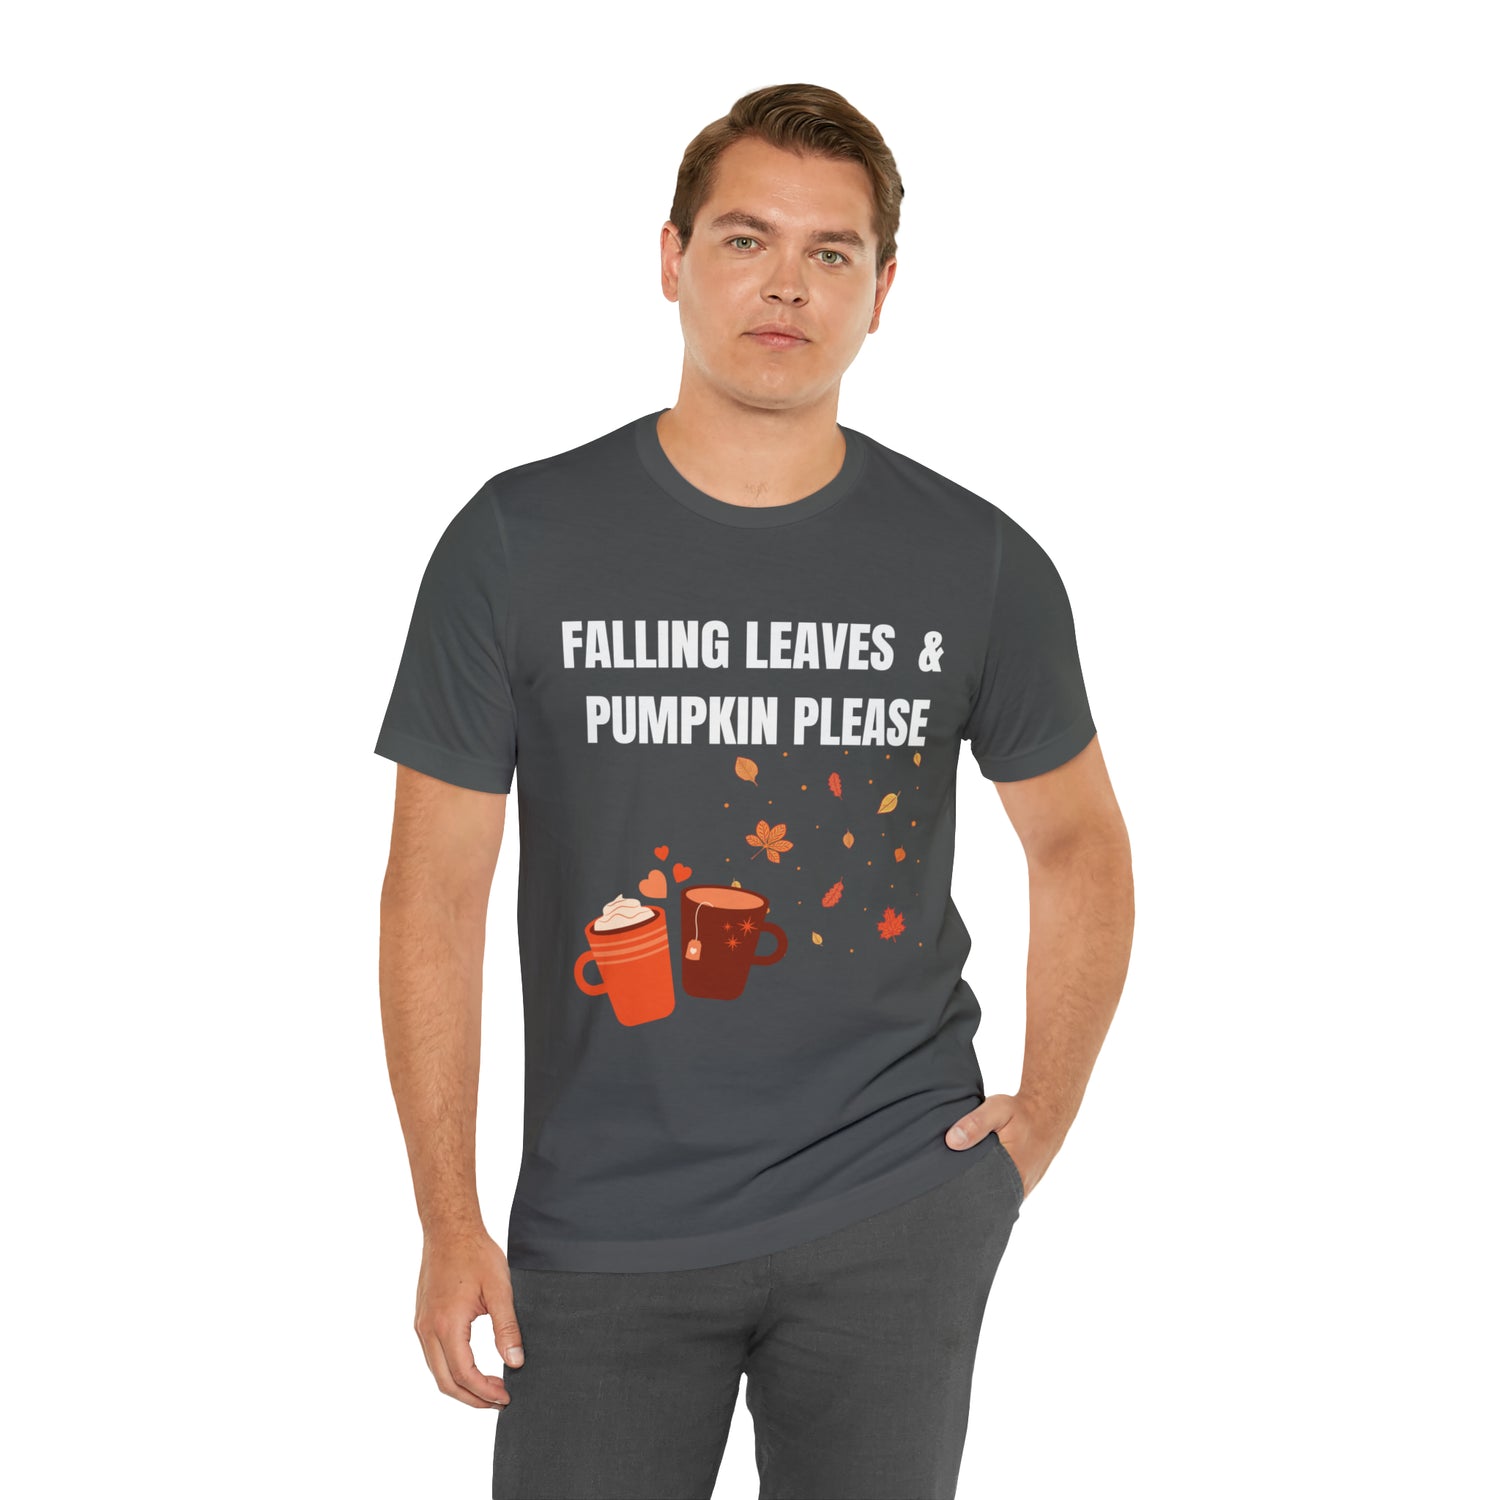 T-Shirt Tshirt Design Gift for Friend and Family Short Sleeved Shirt Fall Fashions Wear Petrova Designs